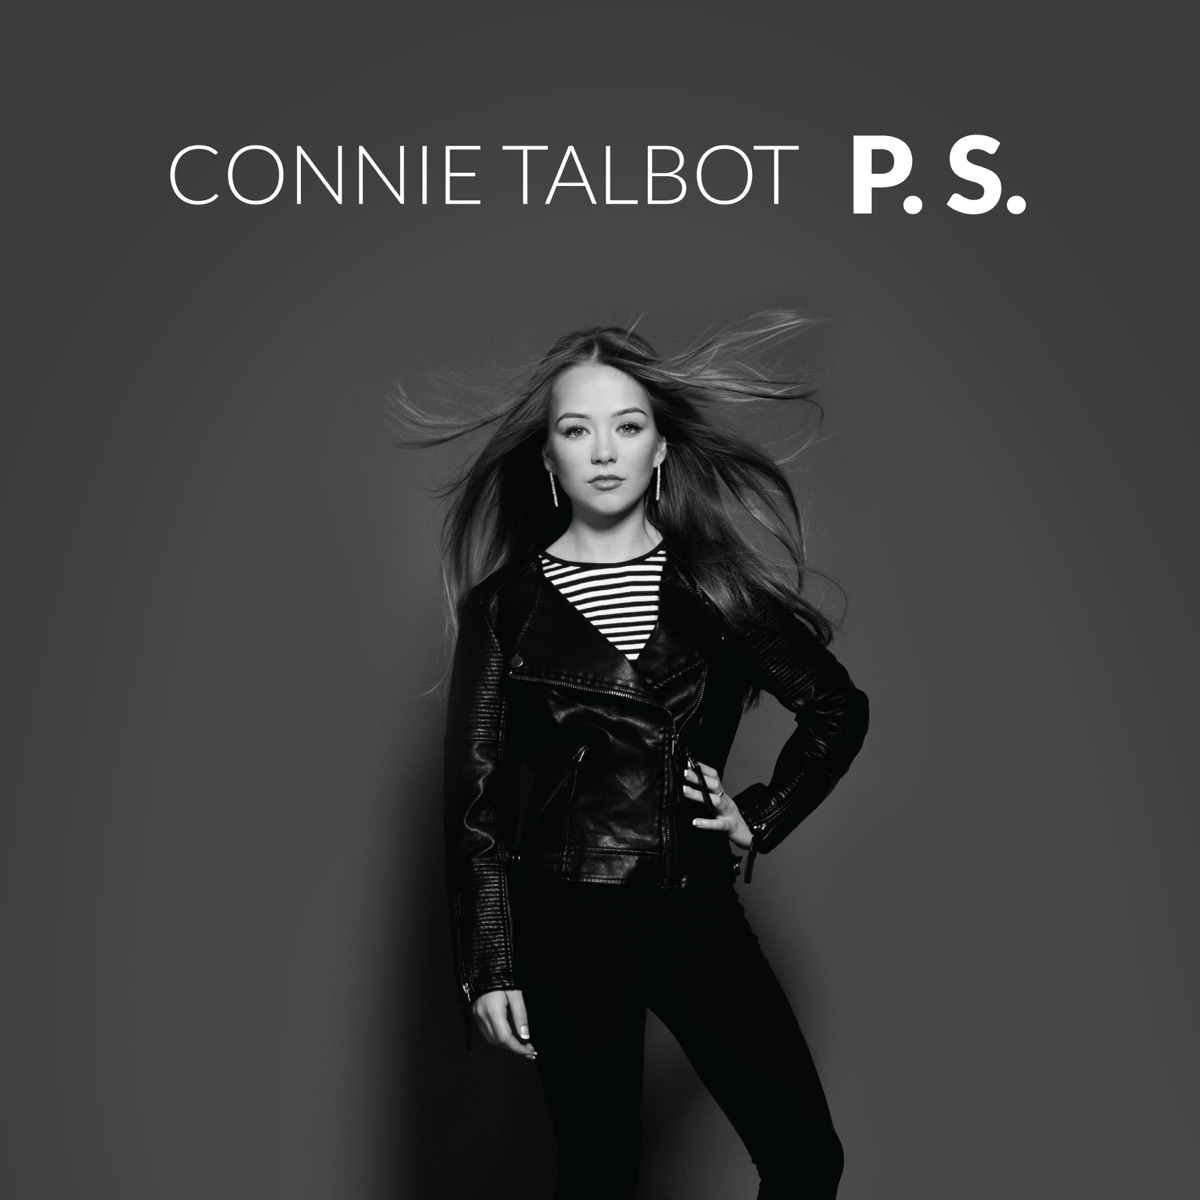 Connie Talbot BEAUTIFUL WORLD LIVE CD